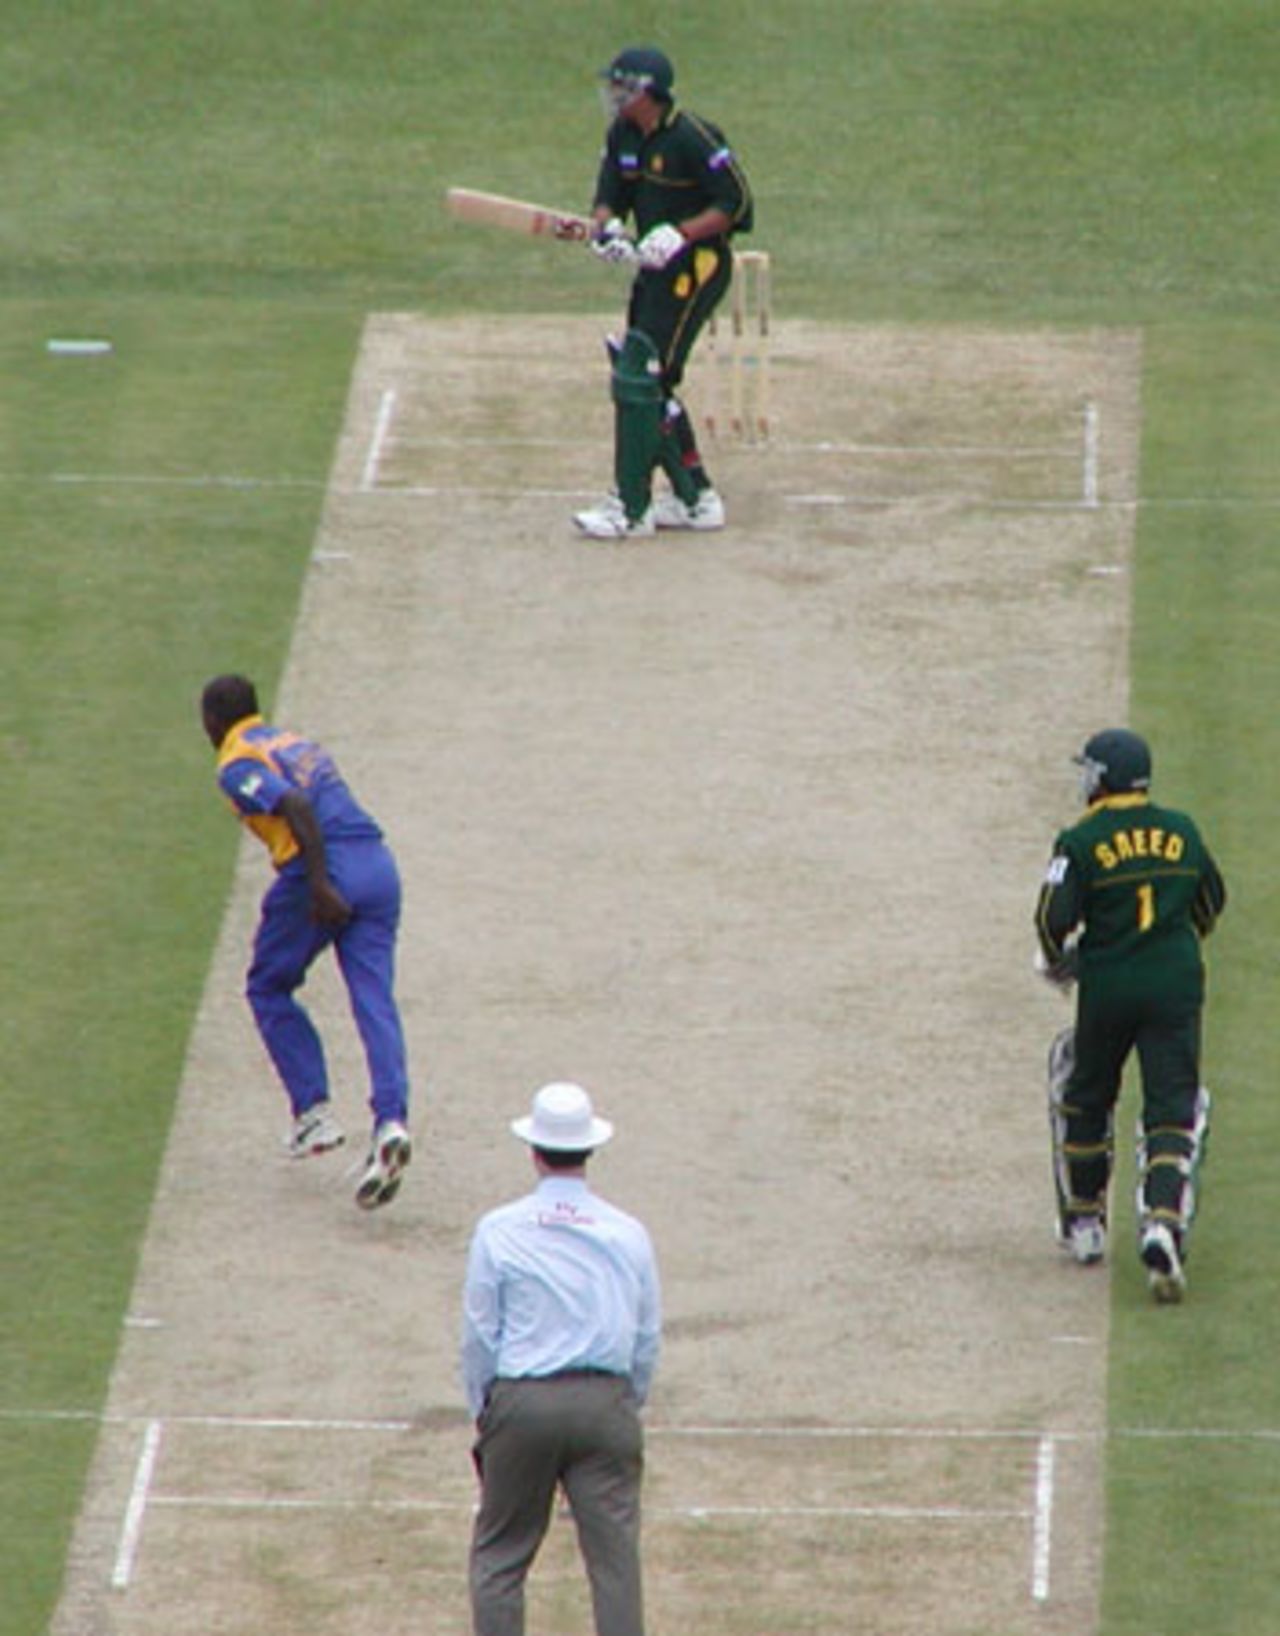 Inzamam cuts to point, Morocco Cup, 2nd ODI at Tangiers, Pakistan v Sri Lanka, 14 Aug 2002